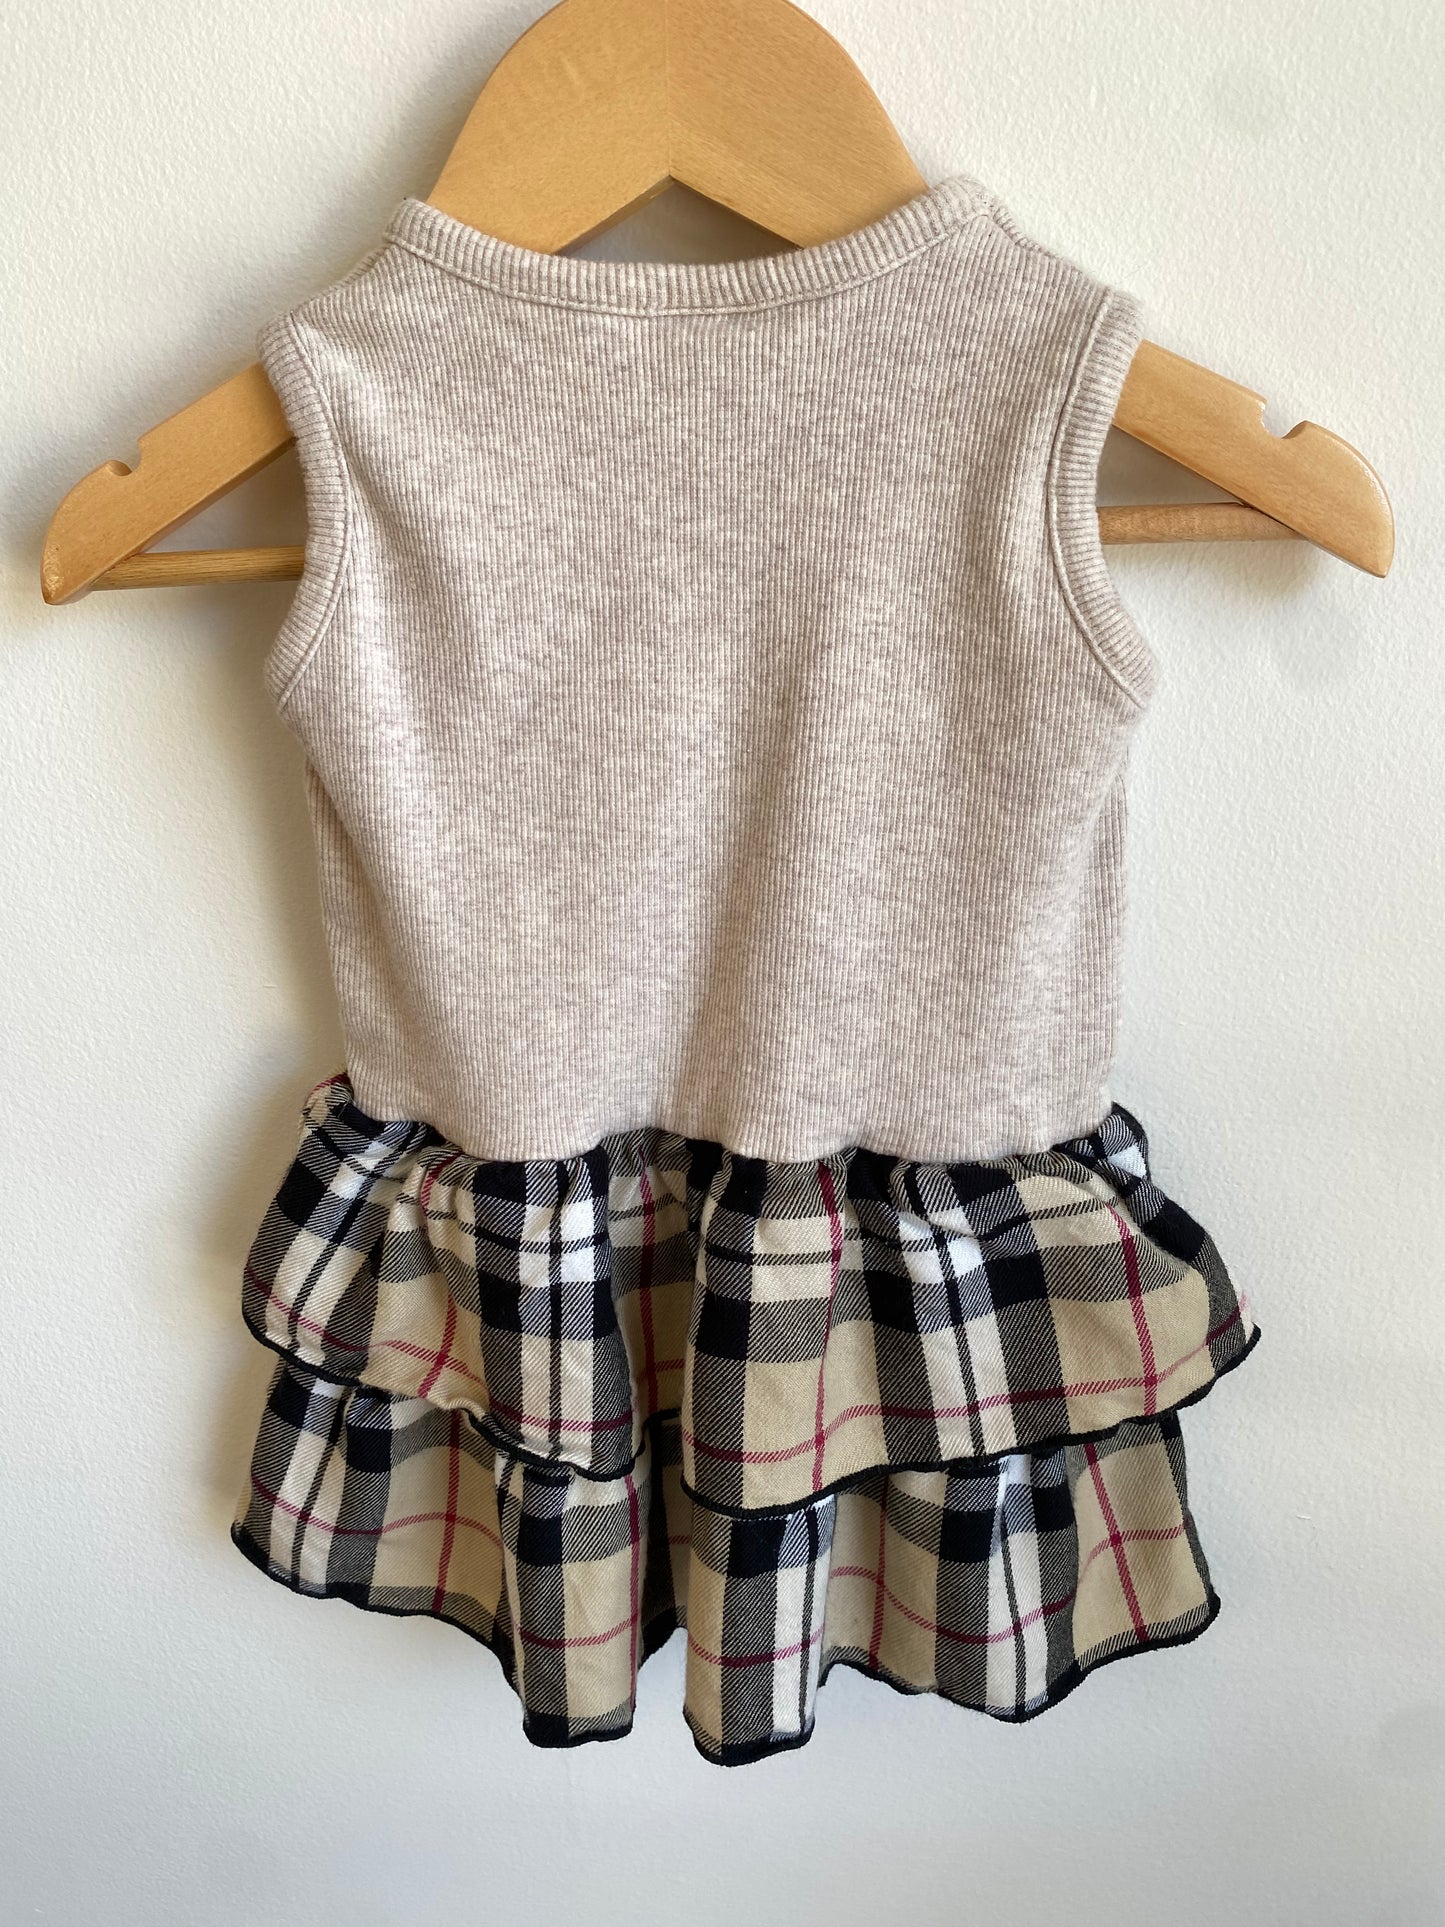 Tan and Pattern Skirt Dress / 12m